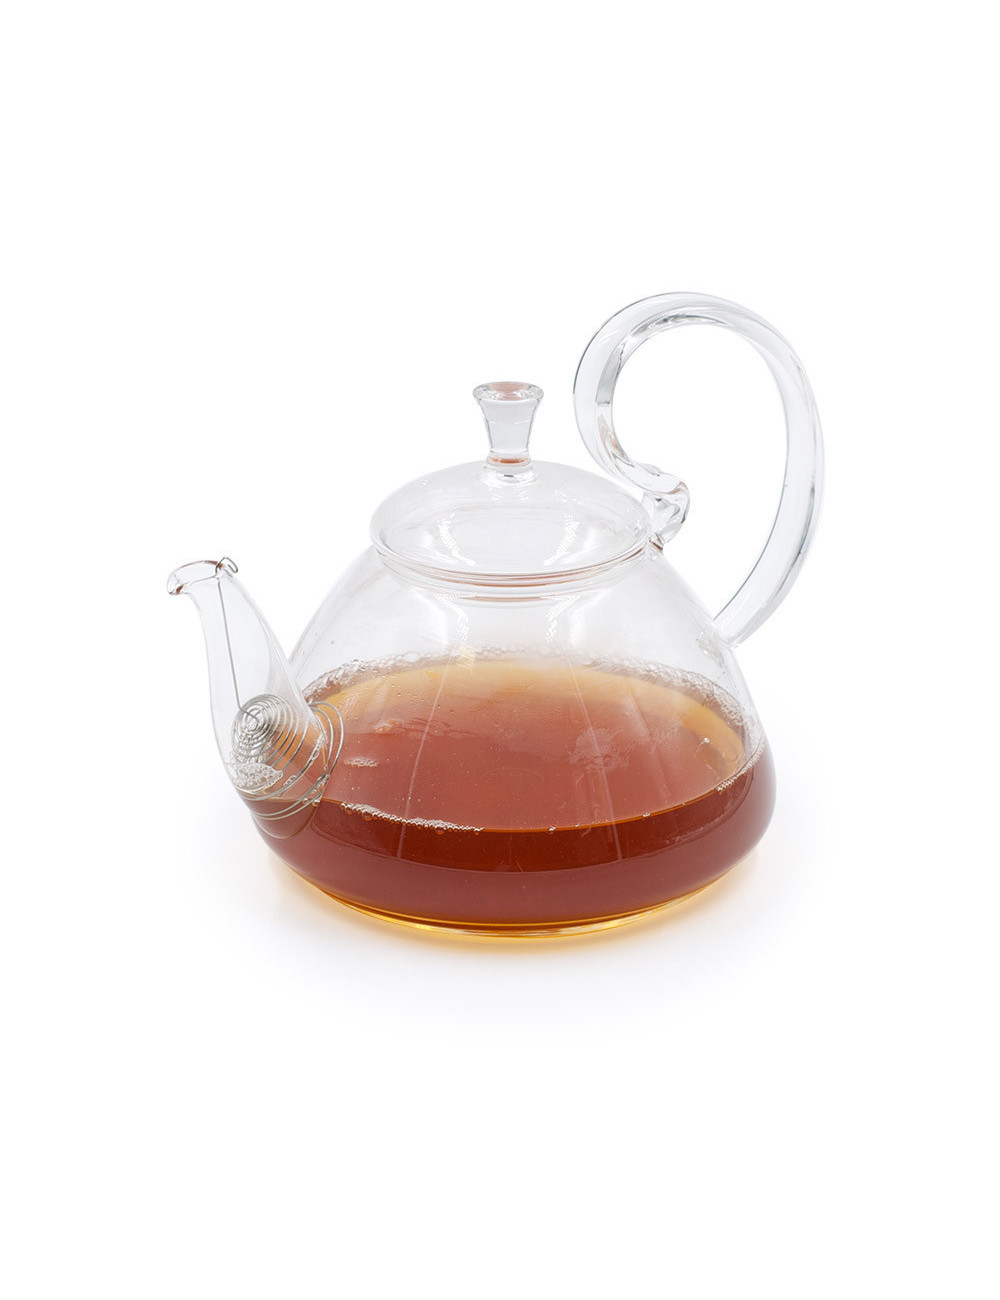 Teiera in vetro Sakae da 1,2 lt - La Pianta del Tè shop online